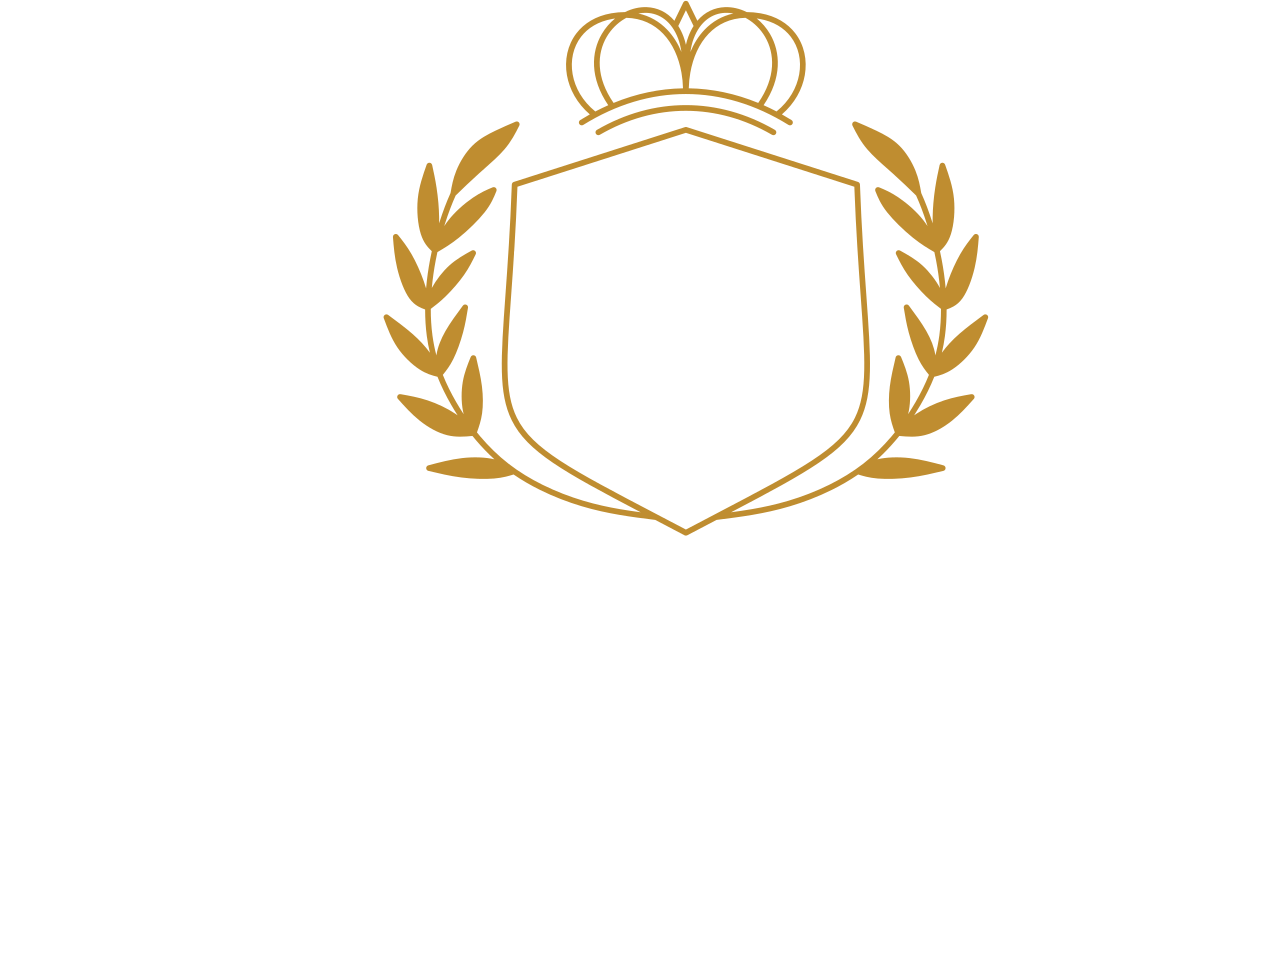 PROVIDENCE Christian Academy's logo